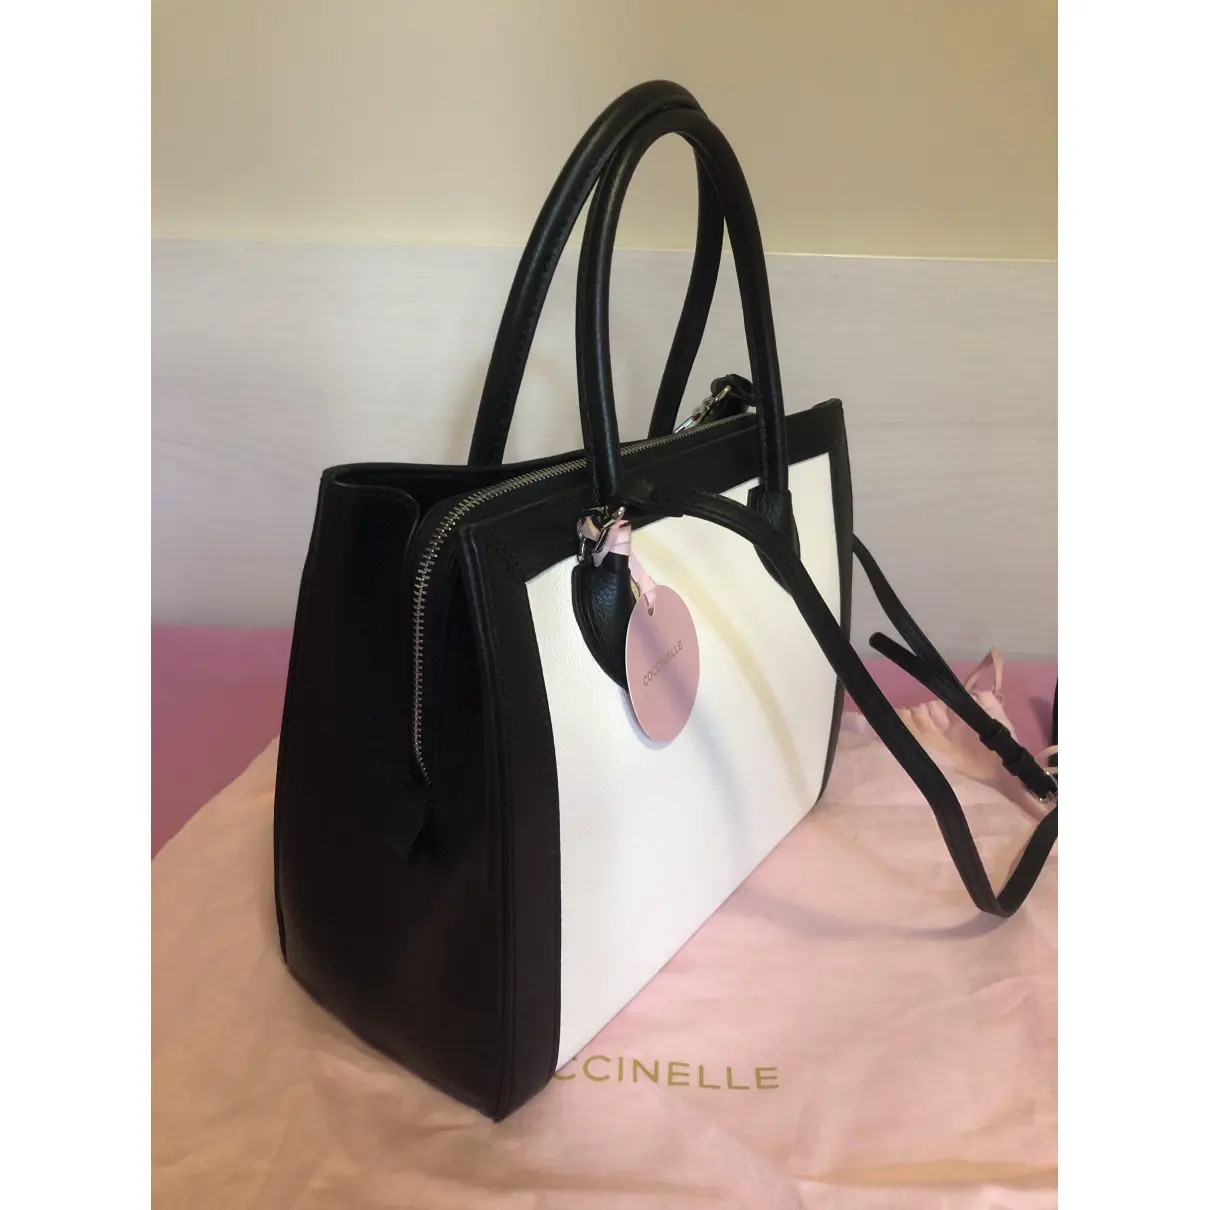 Buy Coccinelle Pony-style calfskin handbag online